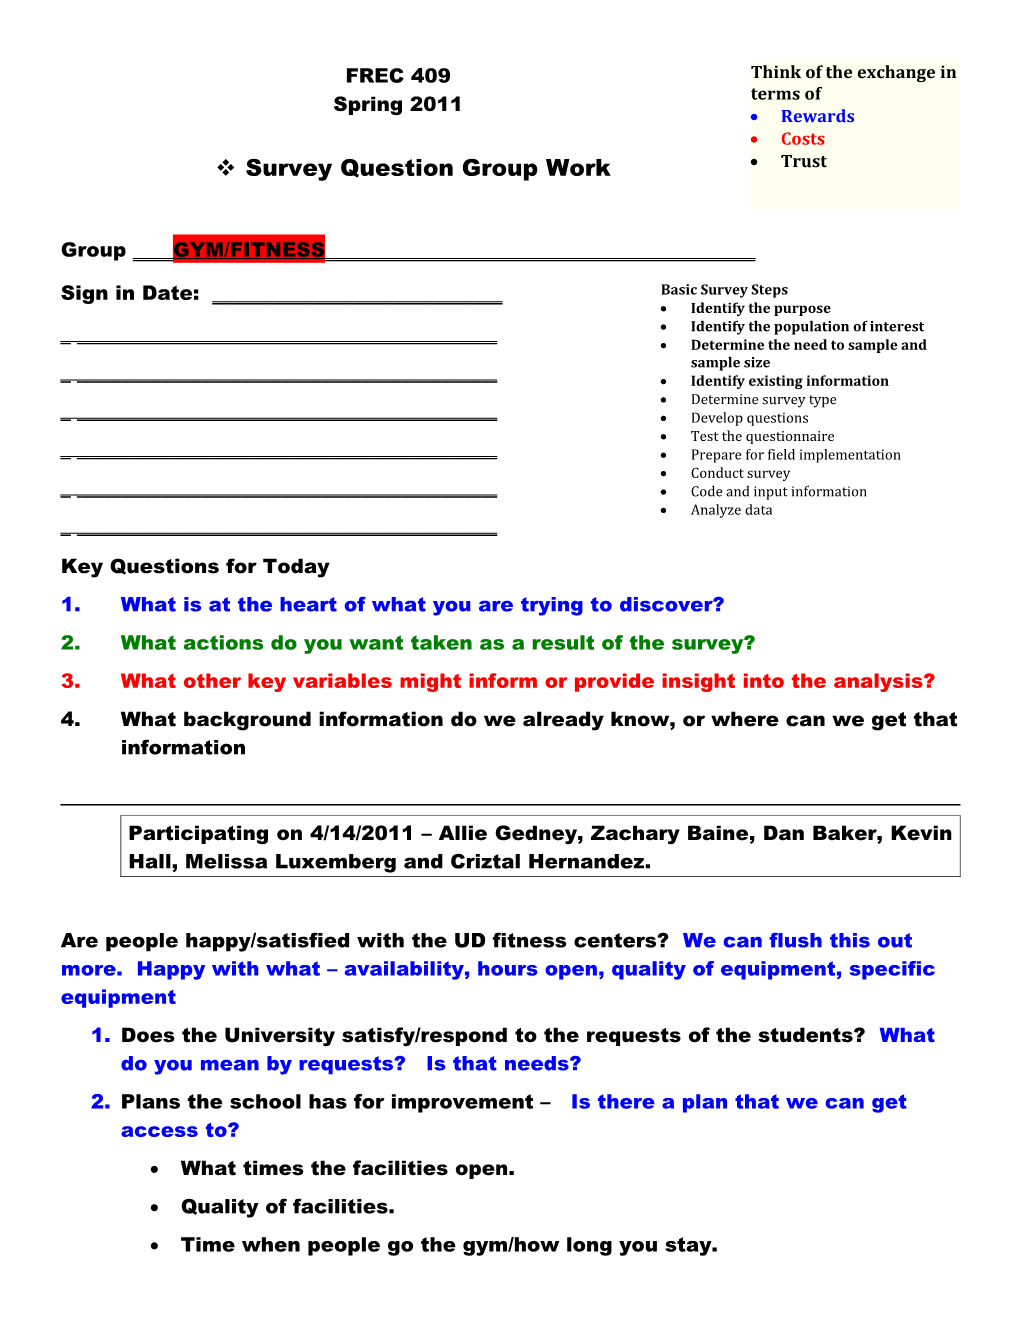 V Survey Question Group Work